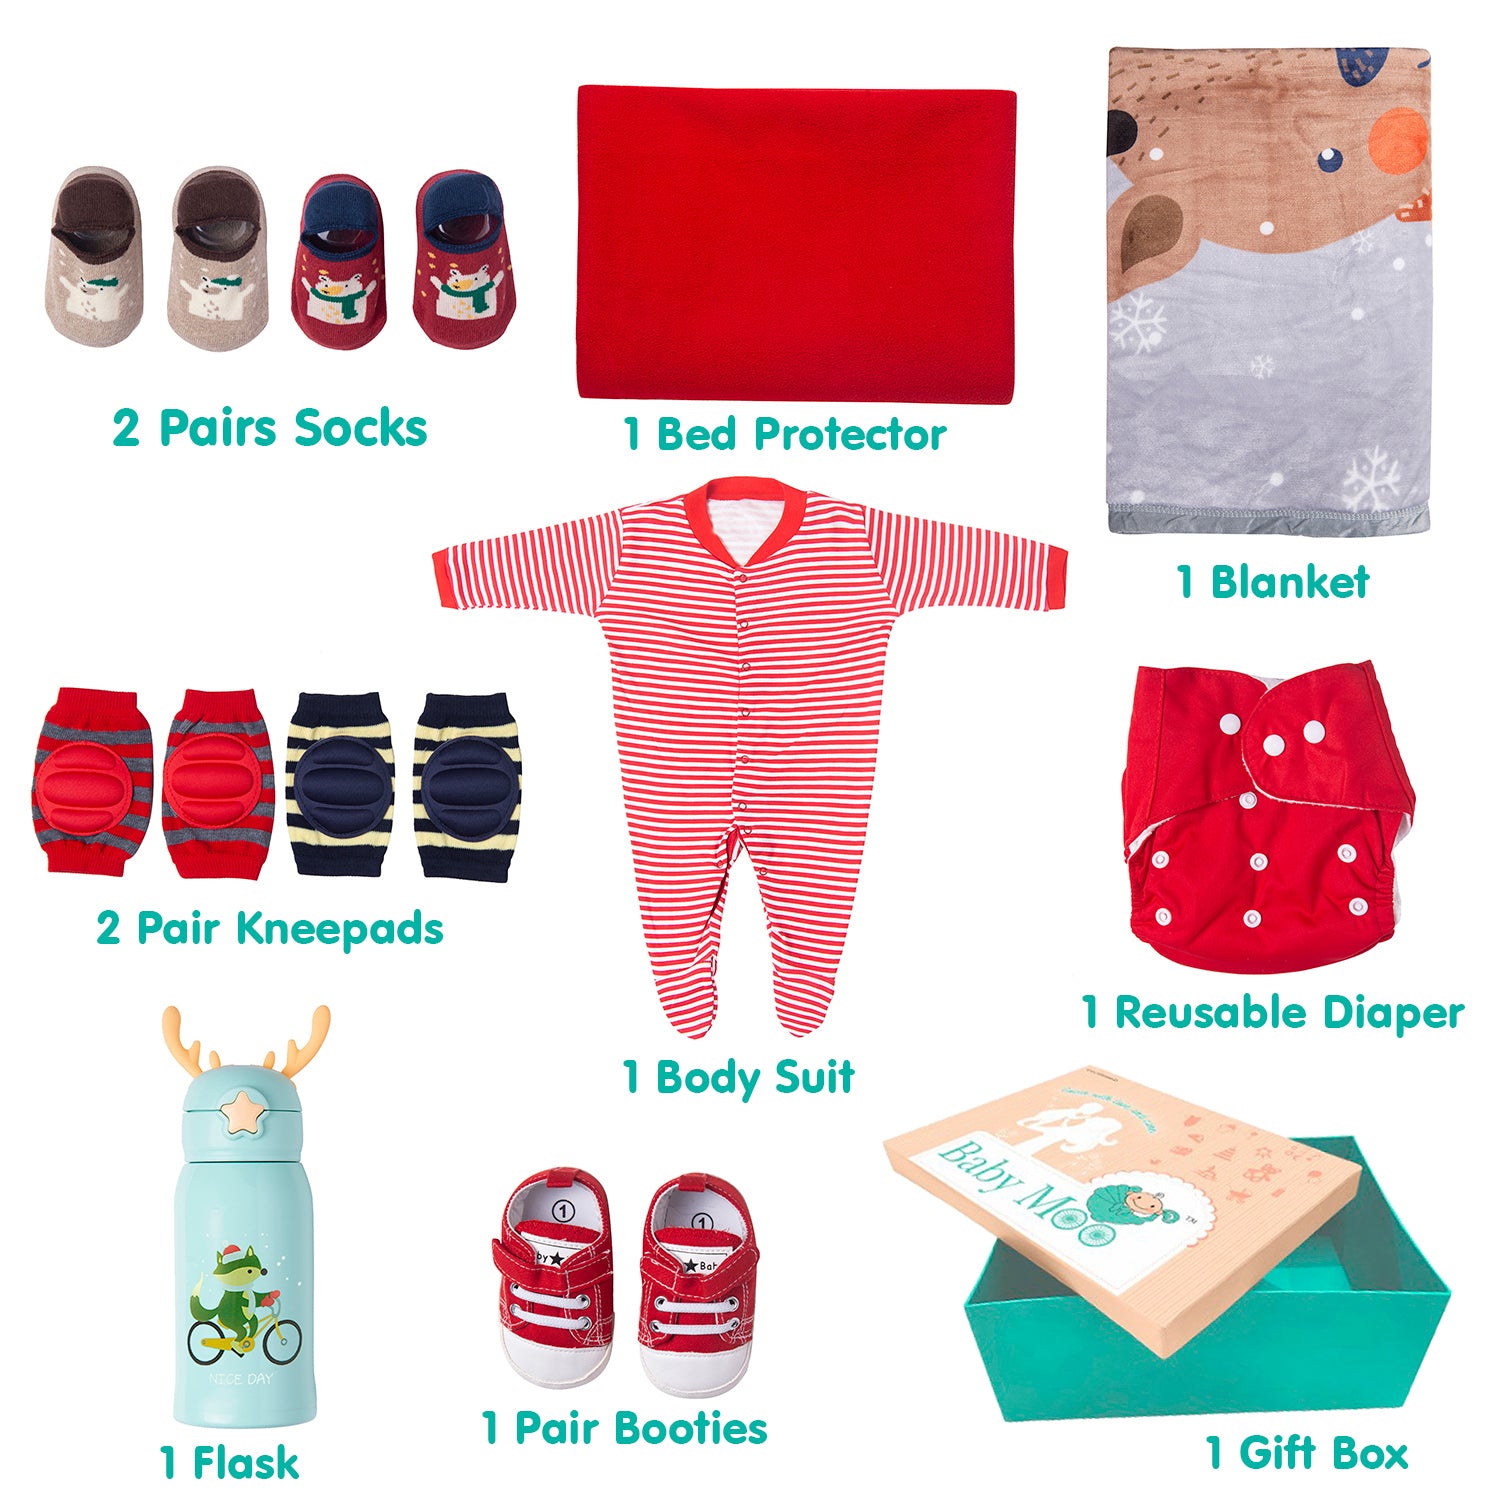 Wonderland Unisex Gift Hamper With Blanket, Romper, Socks And More - Baby Moo